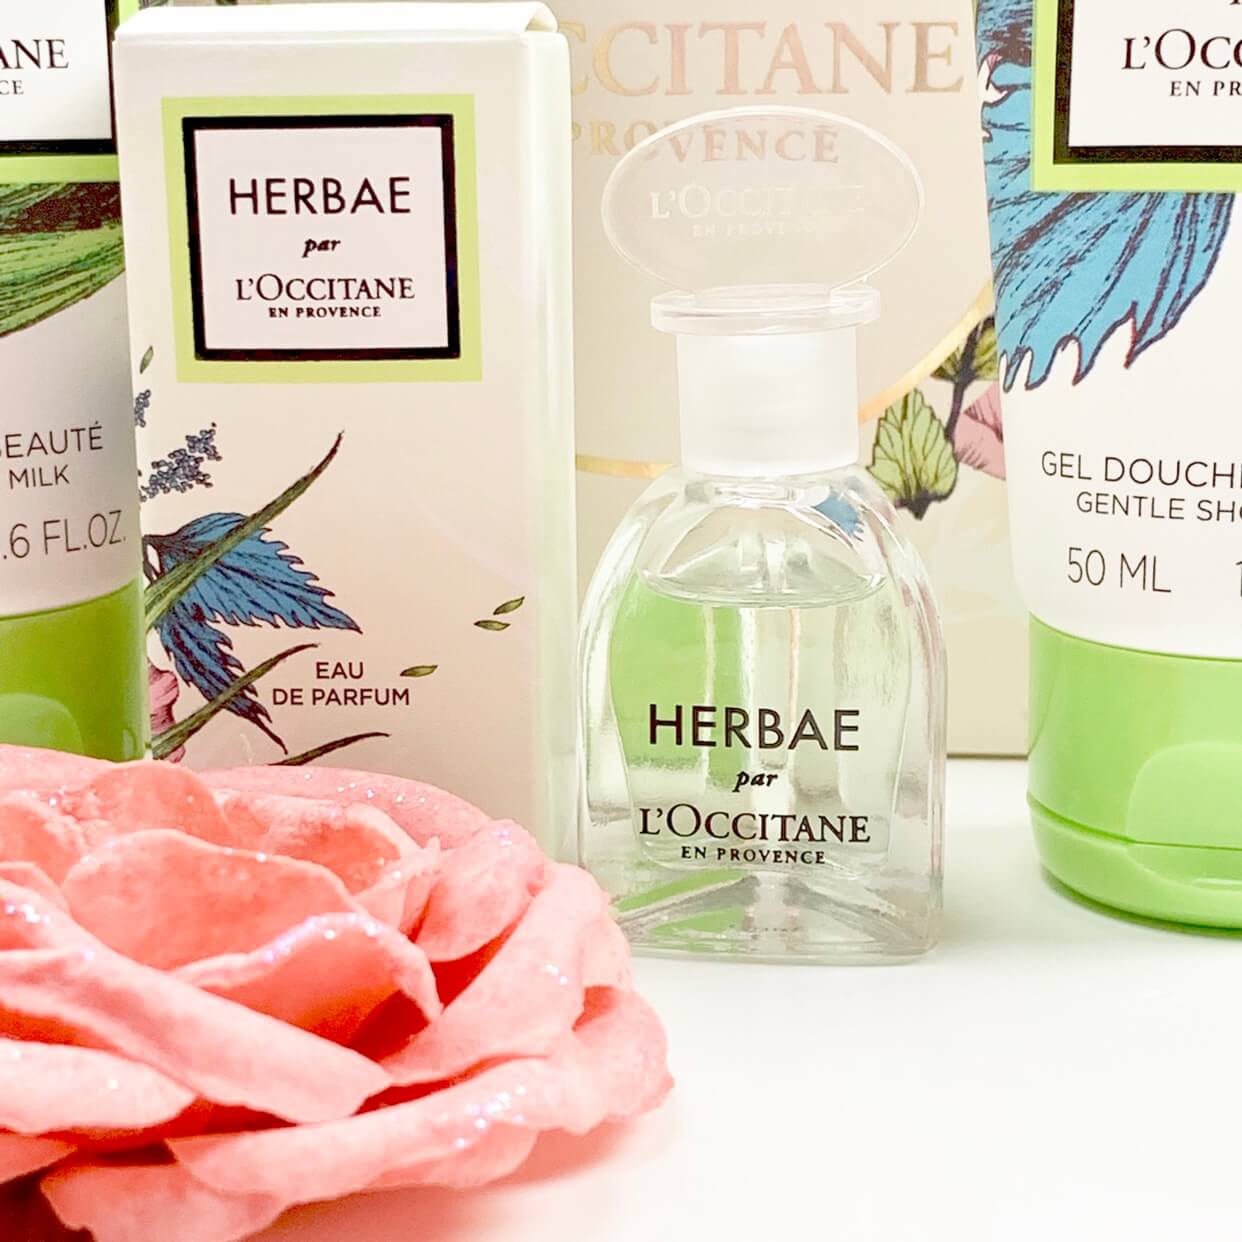 L'occitane Herbae Par Eau De Parfum น้ำหอมที่รังสรรค์จากความงามที่แท้จริงของธรรมชาติ จากพลังพฤกษาอันทรงคุณค่าของหญ้าป่า และไม้หนามหลากชนิด ที่นำพากลิ่นหอมอันแสนงดงามและสดชื่น กลิ่นหอมละมุนของดอกไม้ที่ทั้งทรงพลังและให้ความสดชื่นประดุจกลิ่นผลไม้  